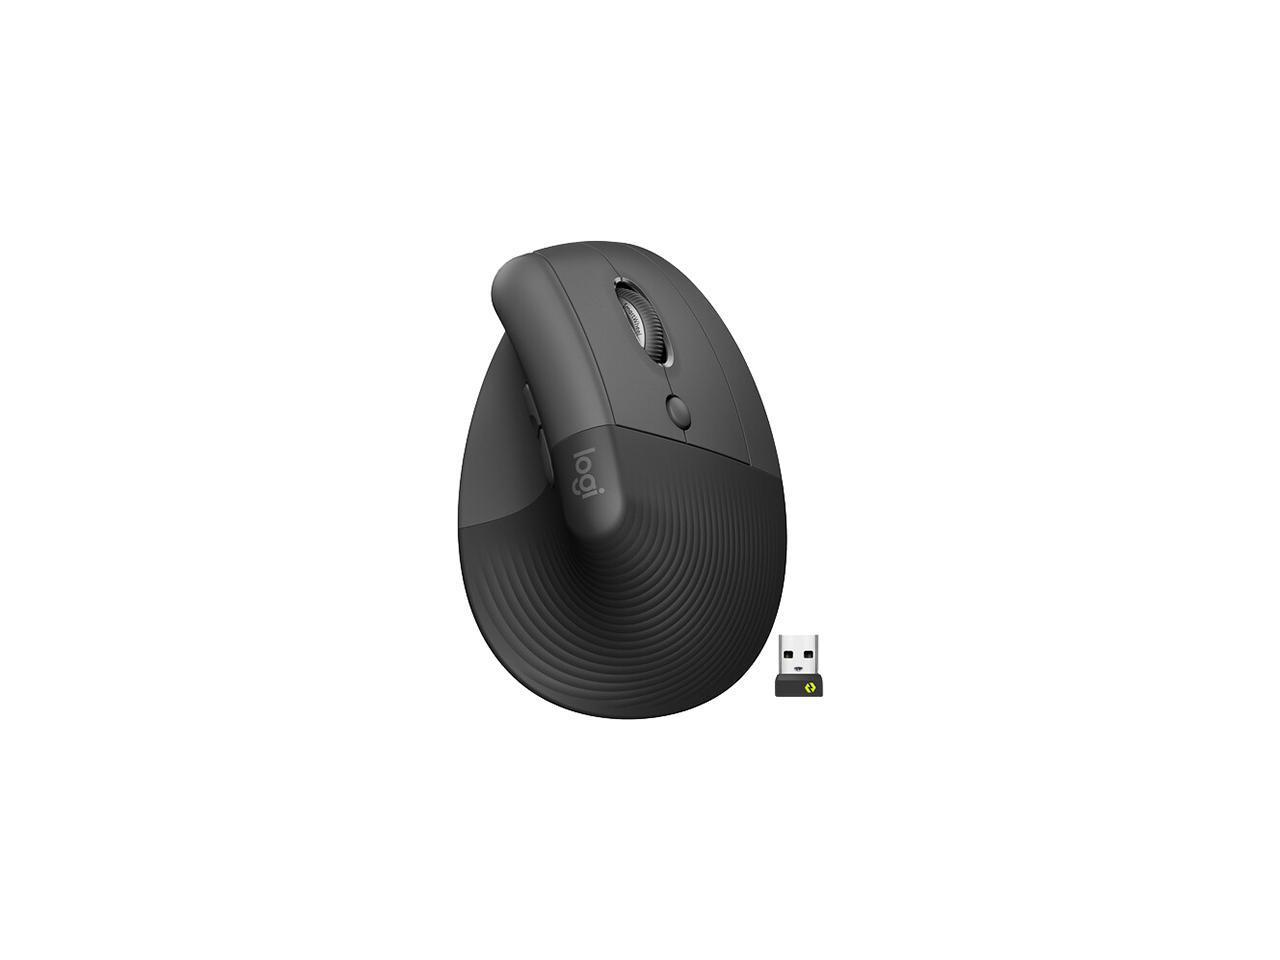 Logitech Lift Vertical Ergonomic Mouse, Wireless, Bluetooth or Logi Bolt USB receiver, Quiet clicks, 4 buttons, compatible with